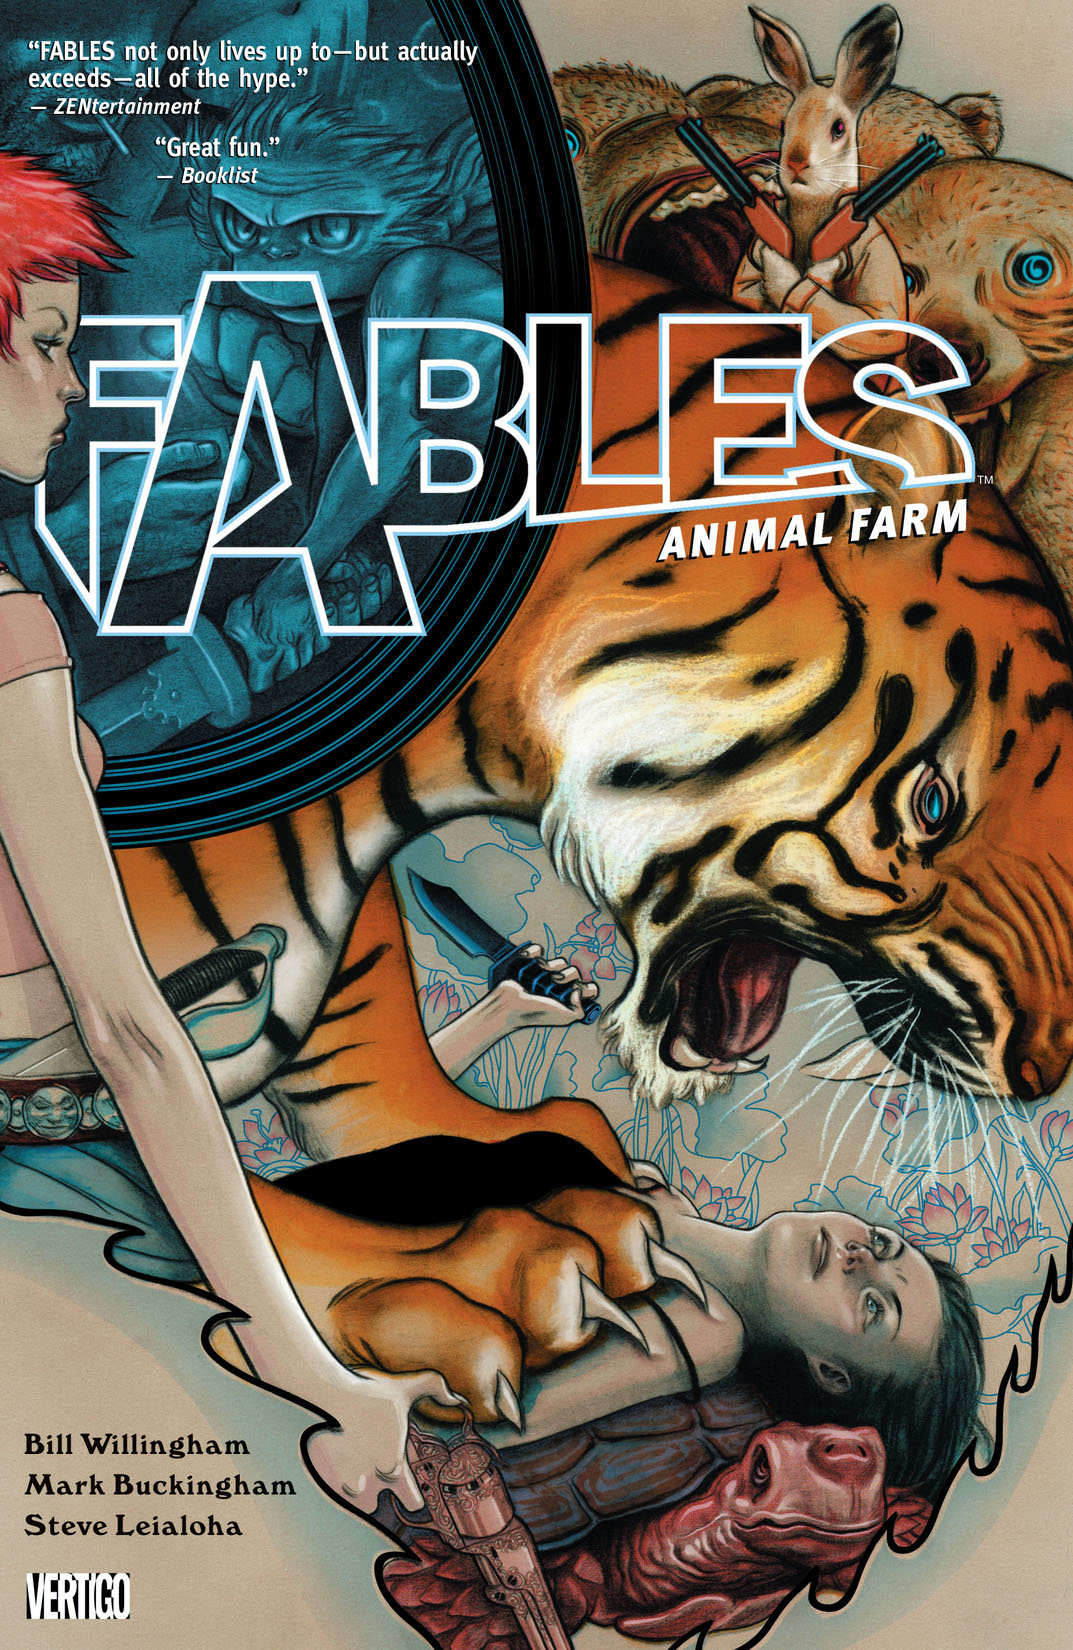 Fables Vol. 2: Animal Farm preview images